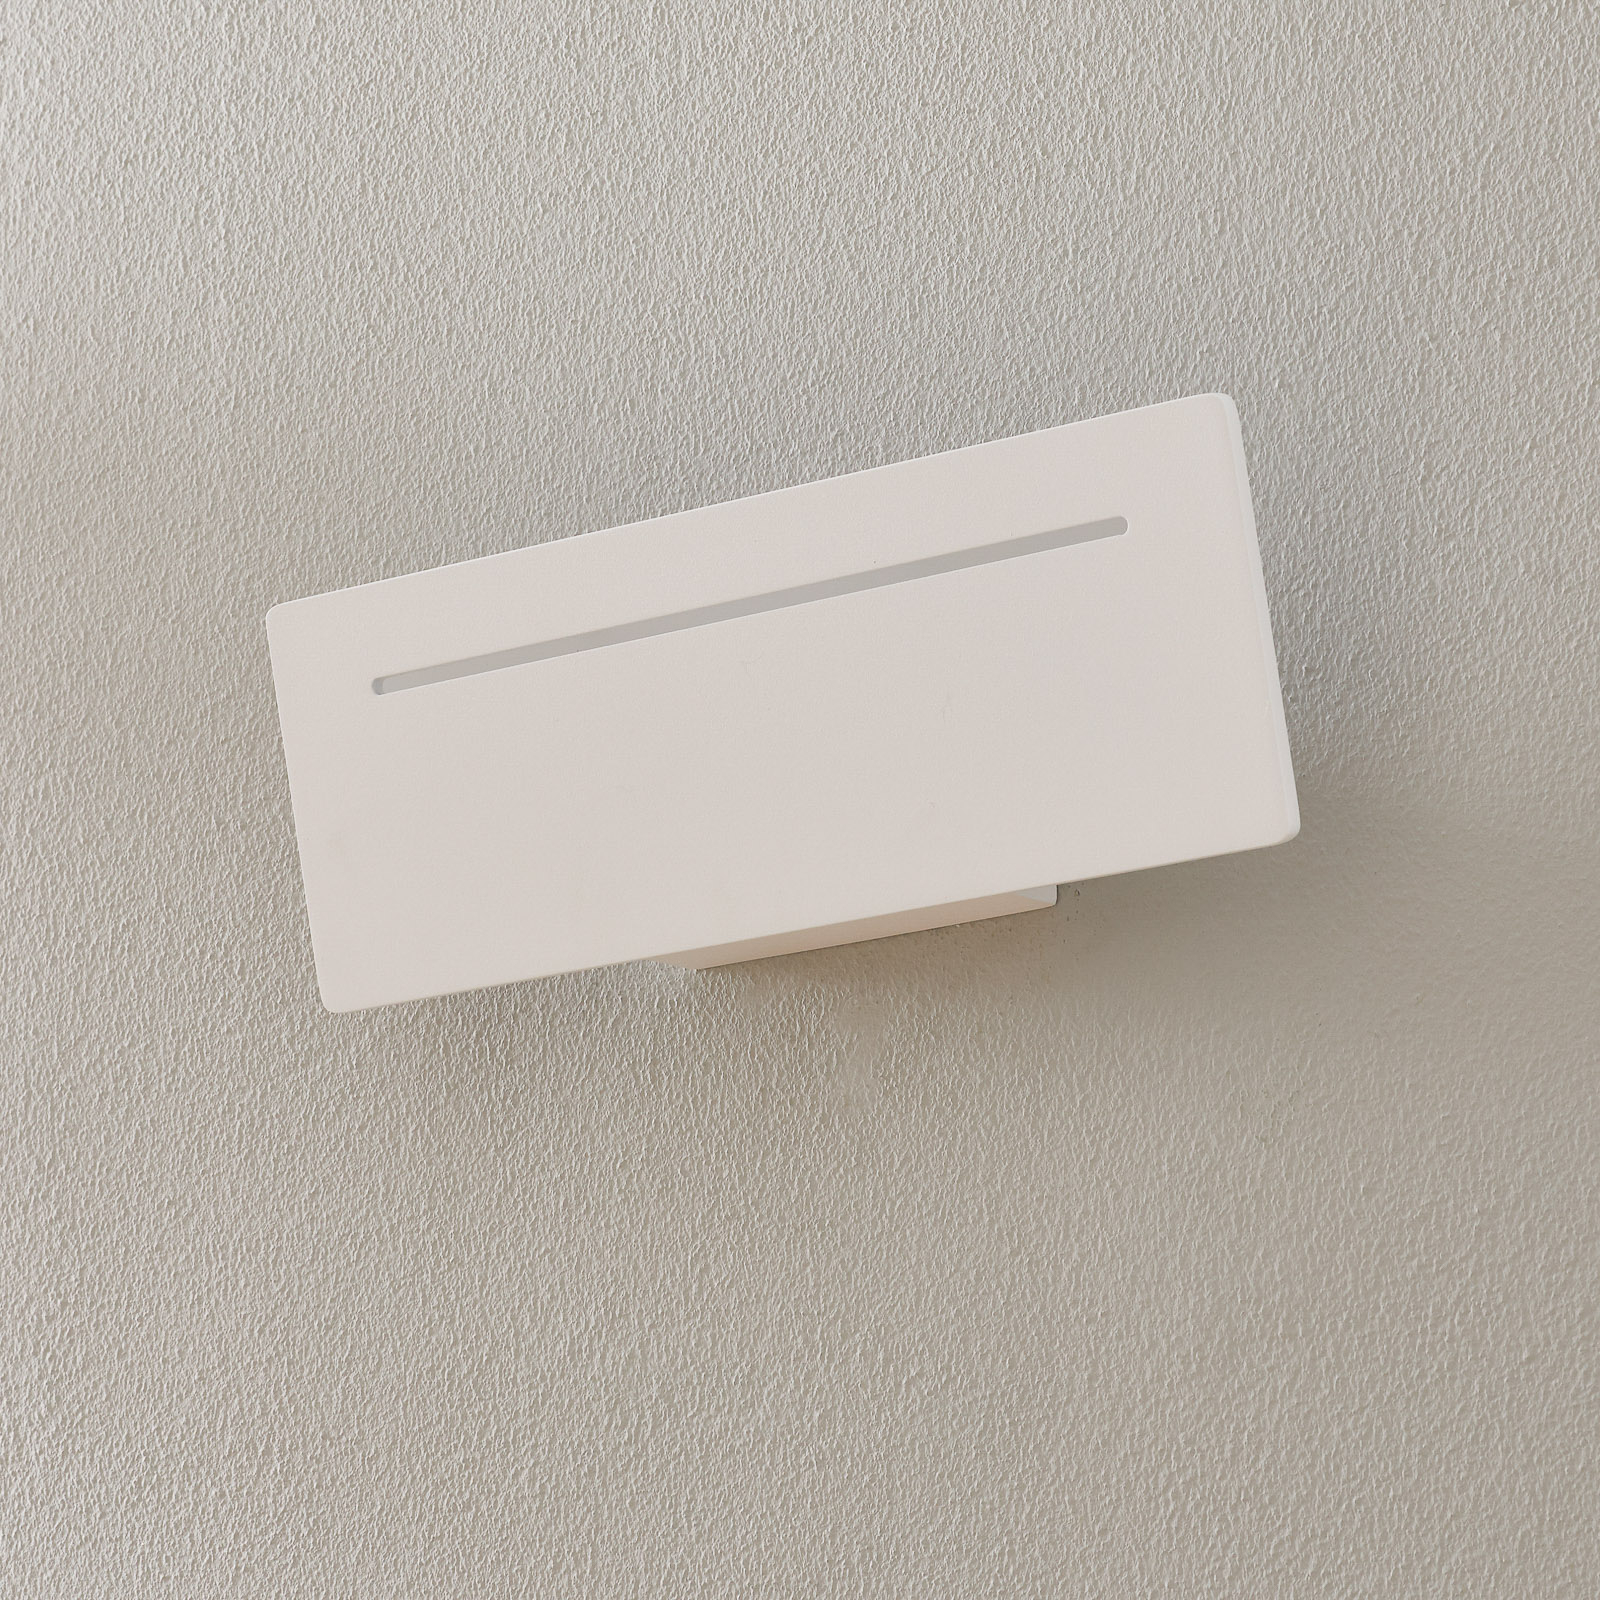 LED wall light Toja, warm white, 35 cm